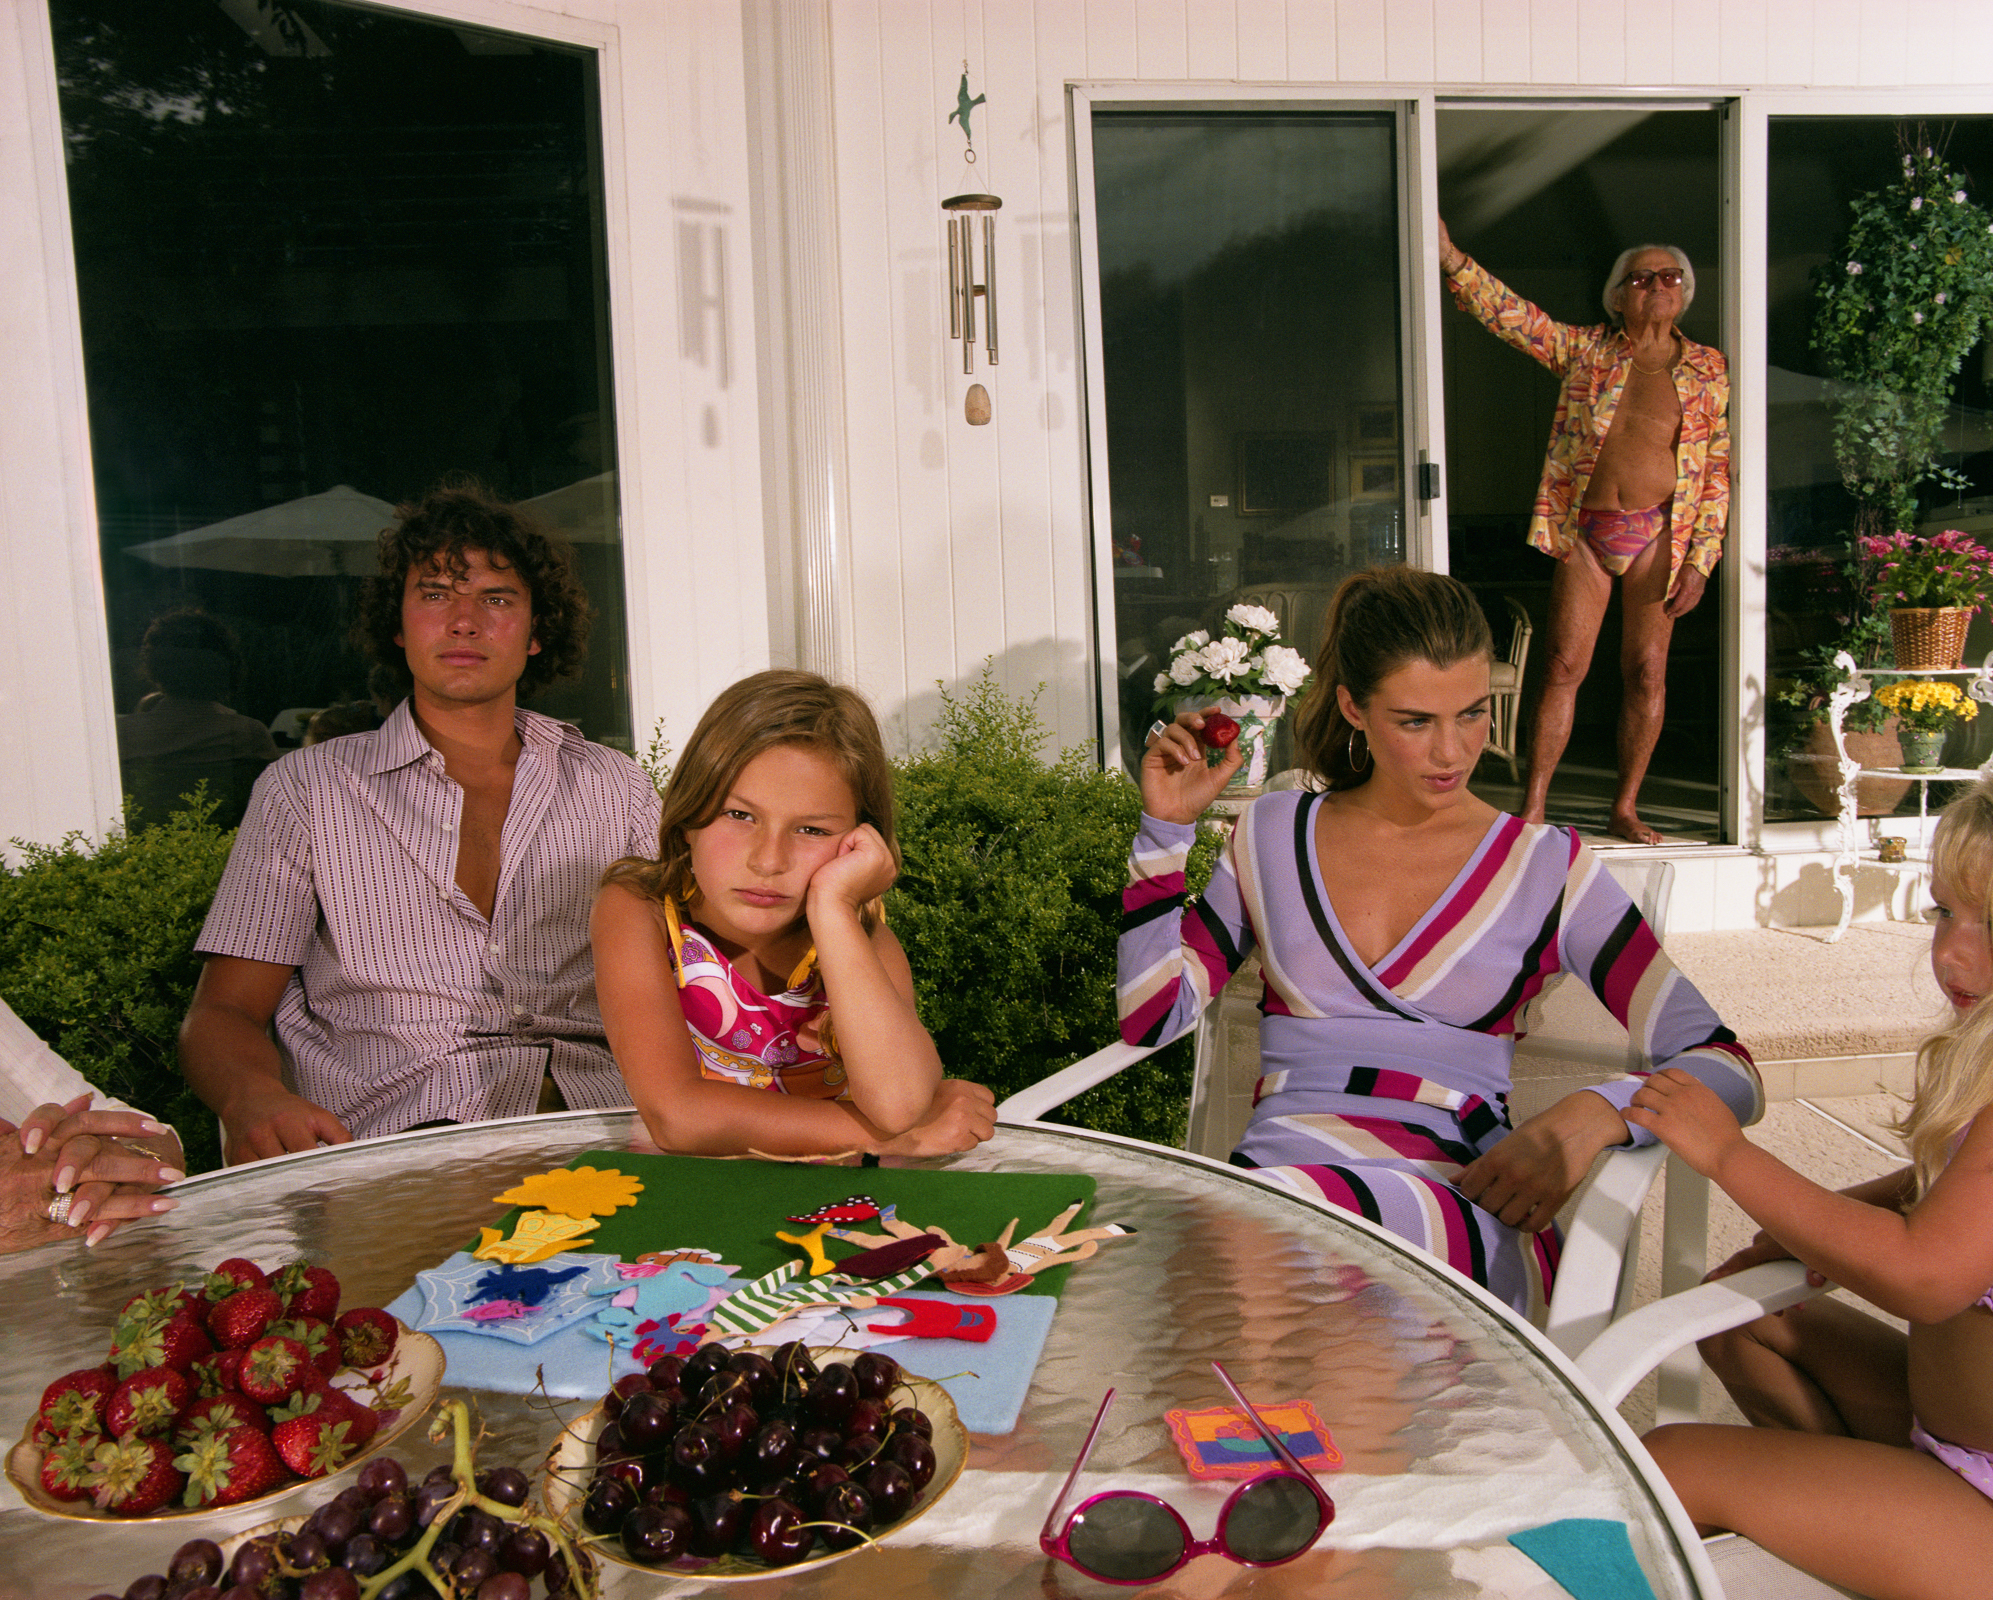 Gillian Laub, Chappaqua backyard, 2000. family matters